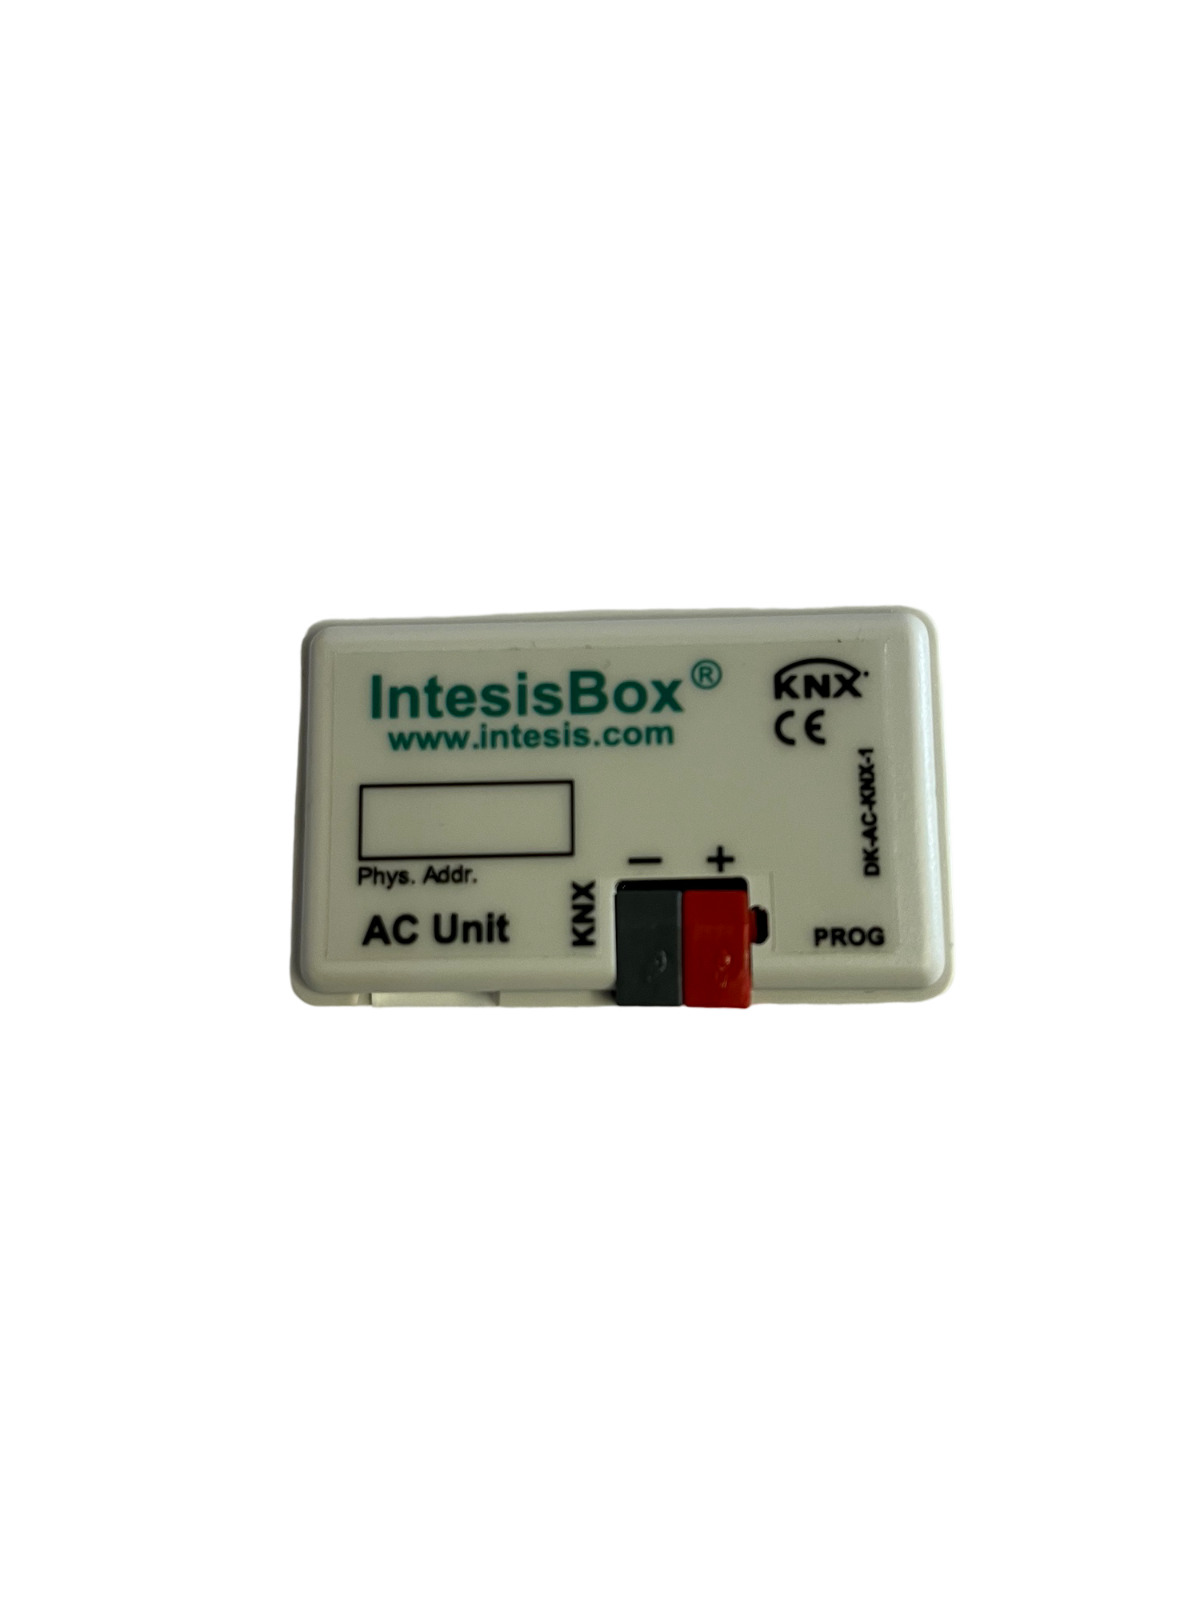 Intesis box dk-ac-knx-1